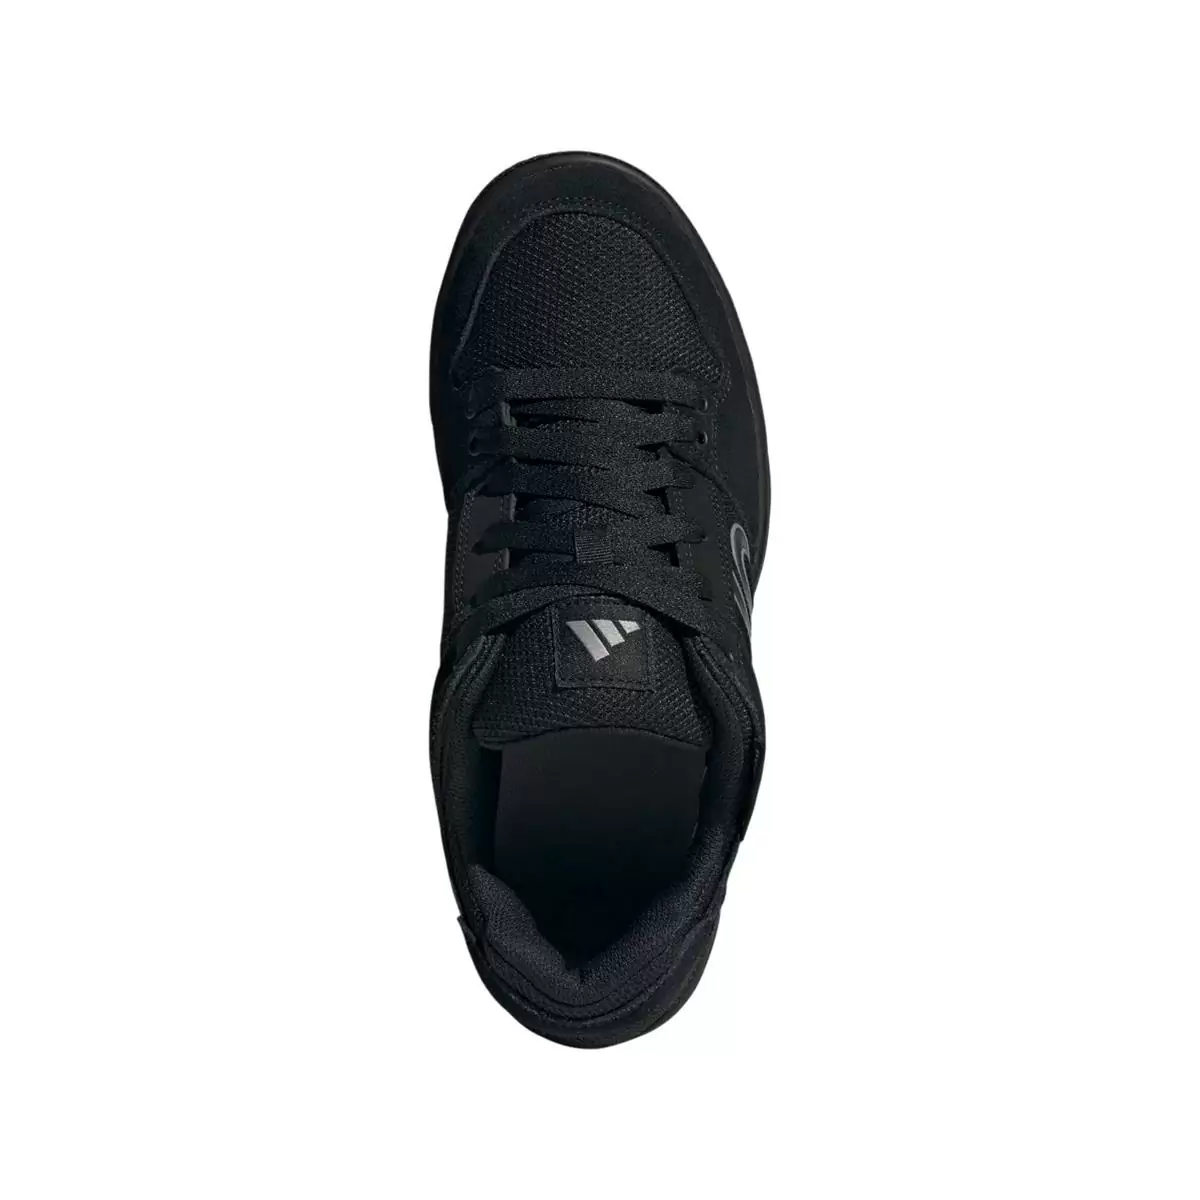 MTB Shoes Flat Freerider Black Size 43 #1